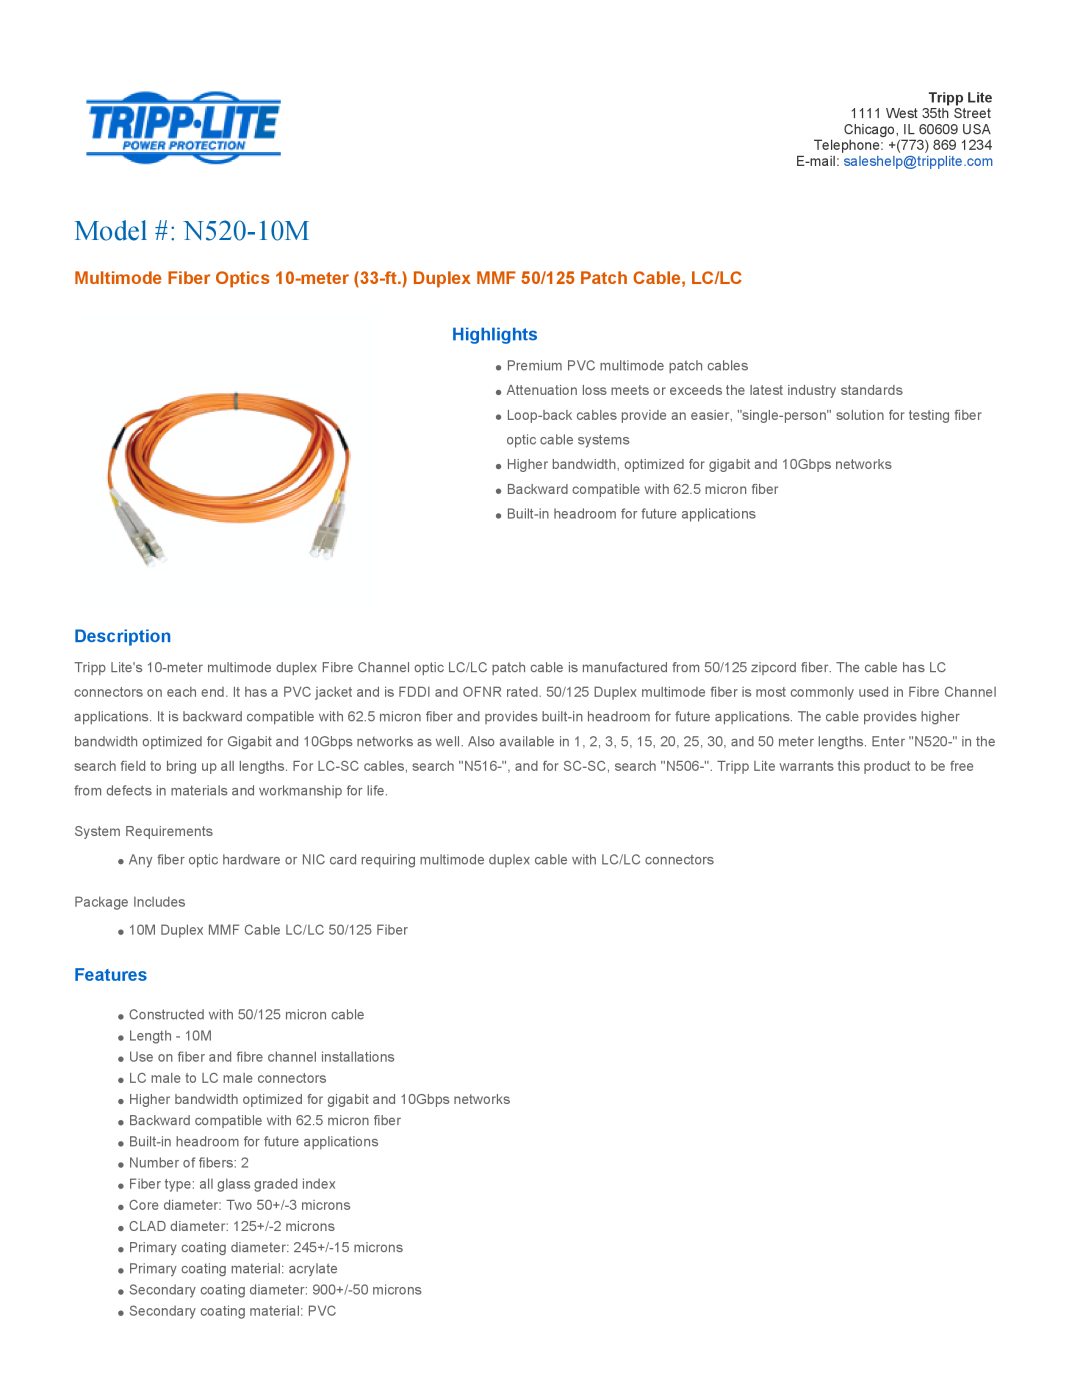 Tripp Lite manual Highlights, Description, Features, Model # N520-10M 